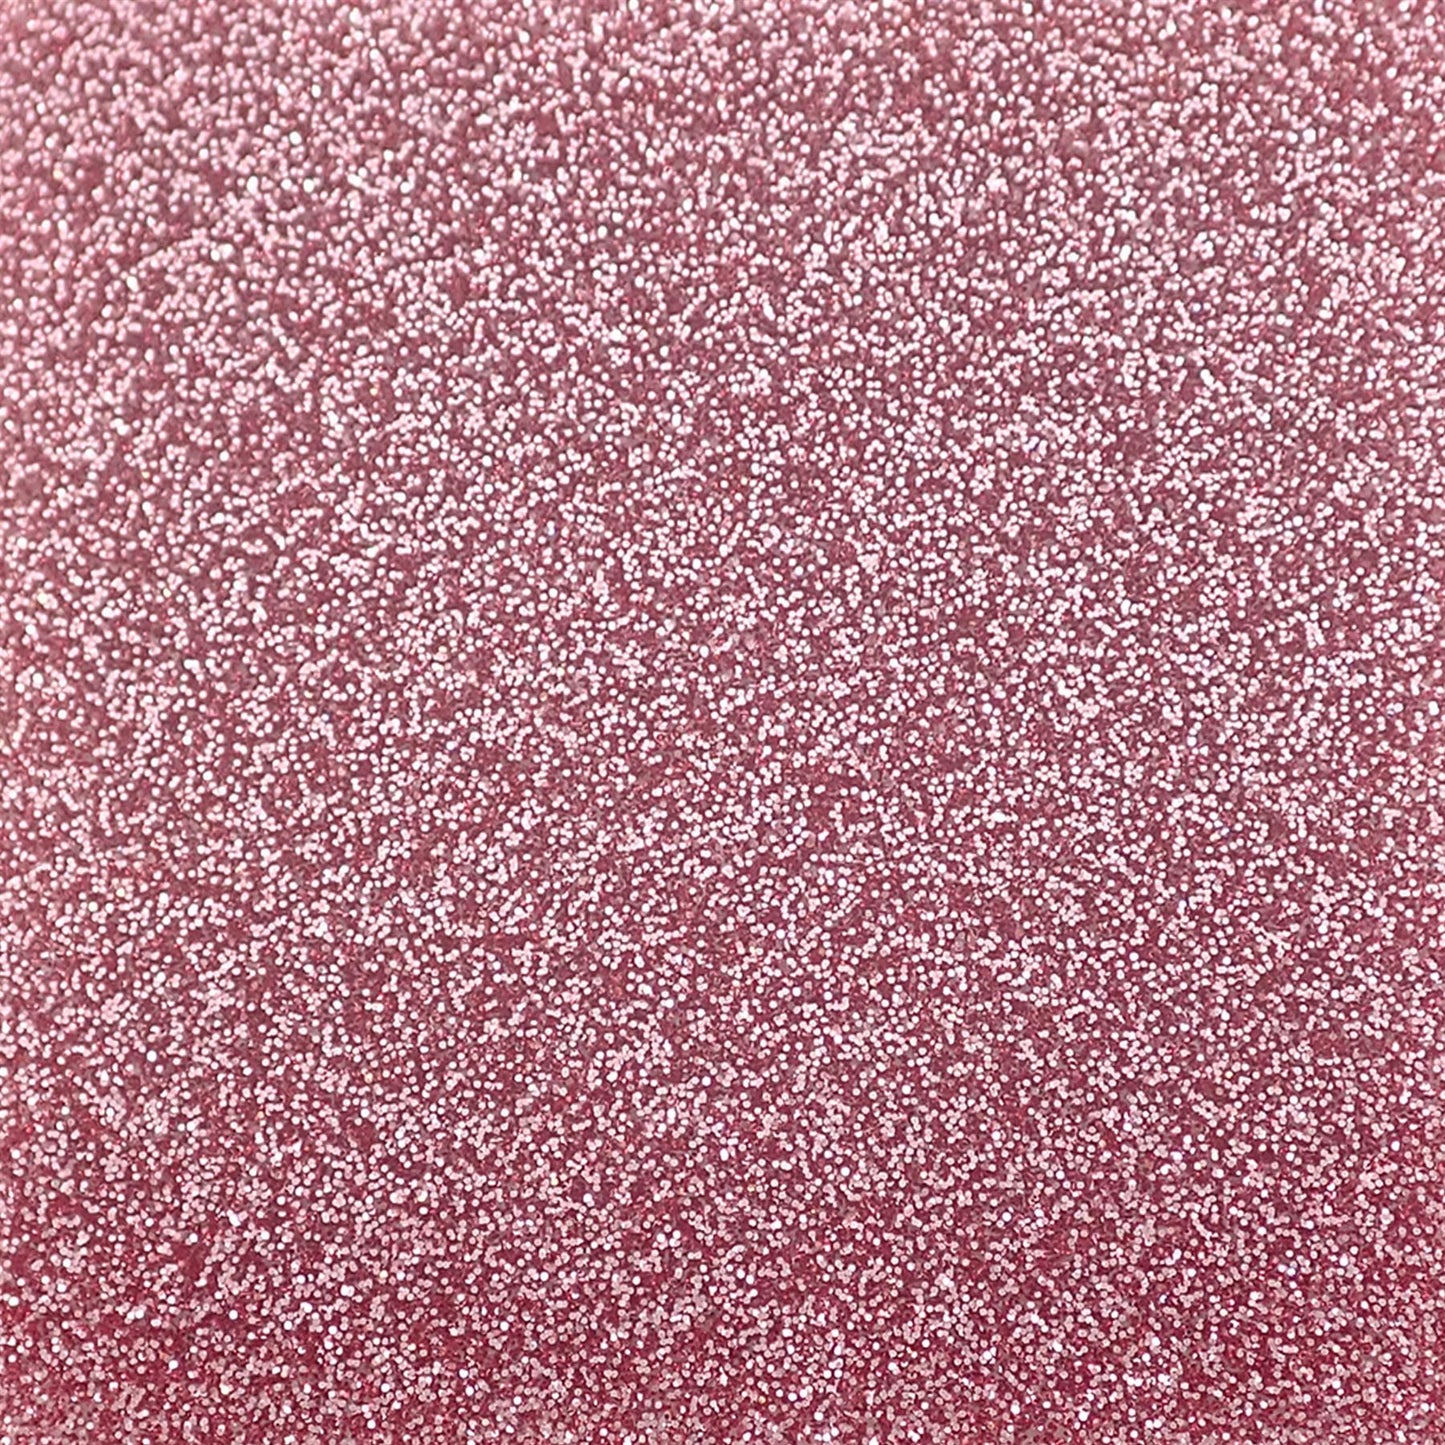 Incudo Pink Rose Glitter Acrylic Sheet - 150x125x3mm